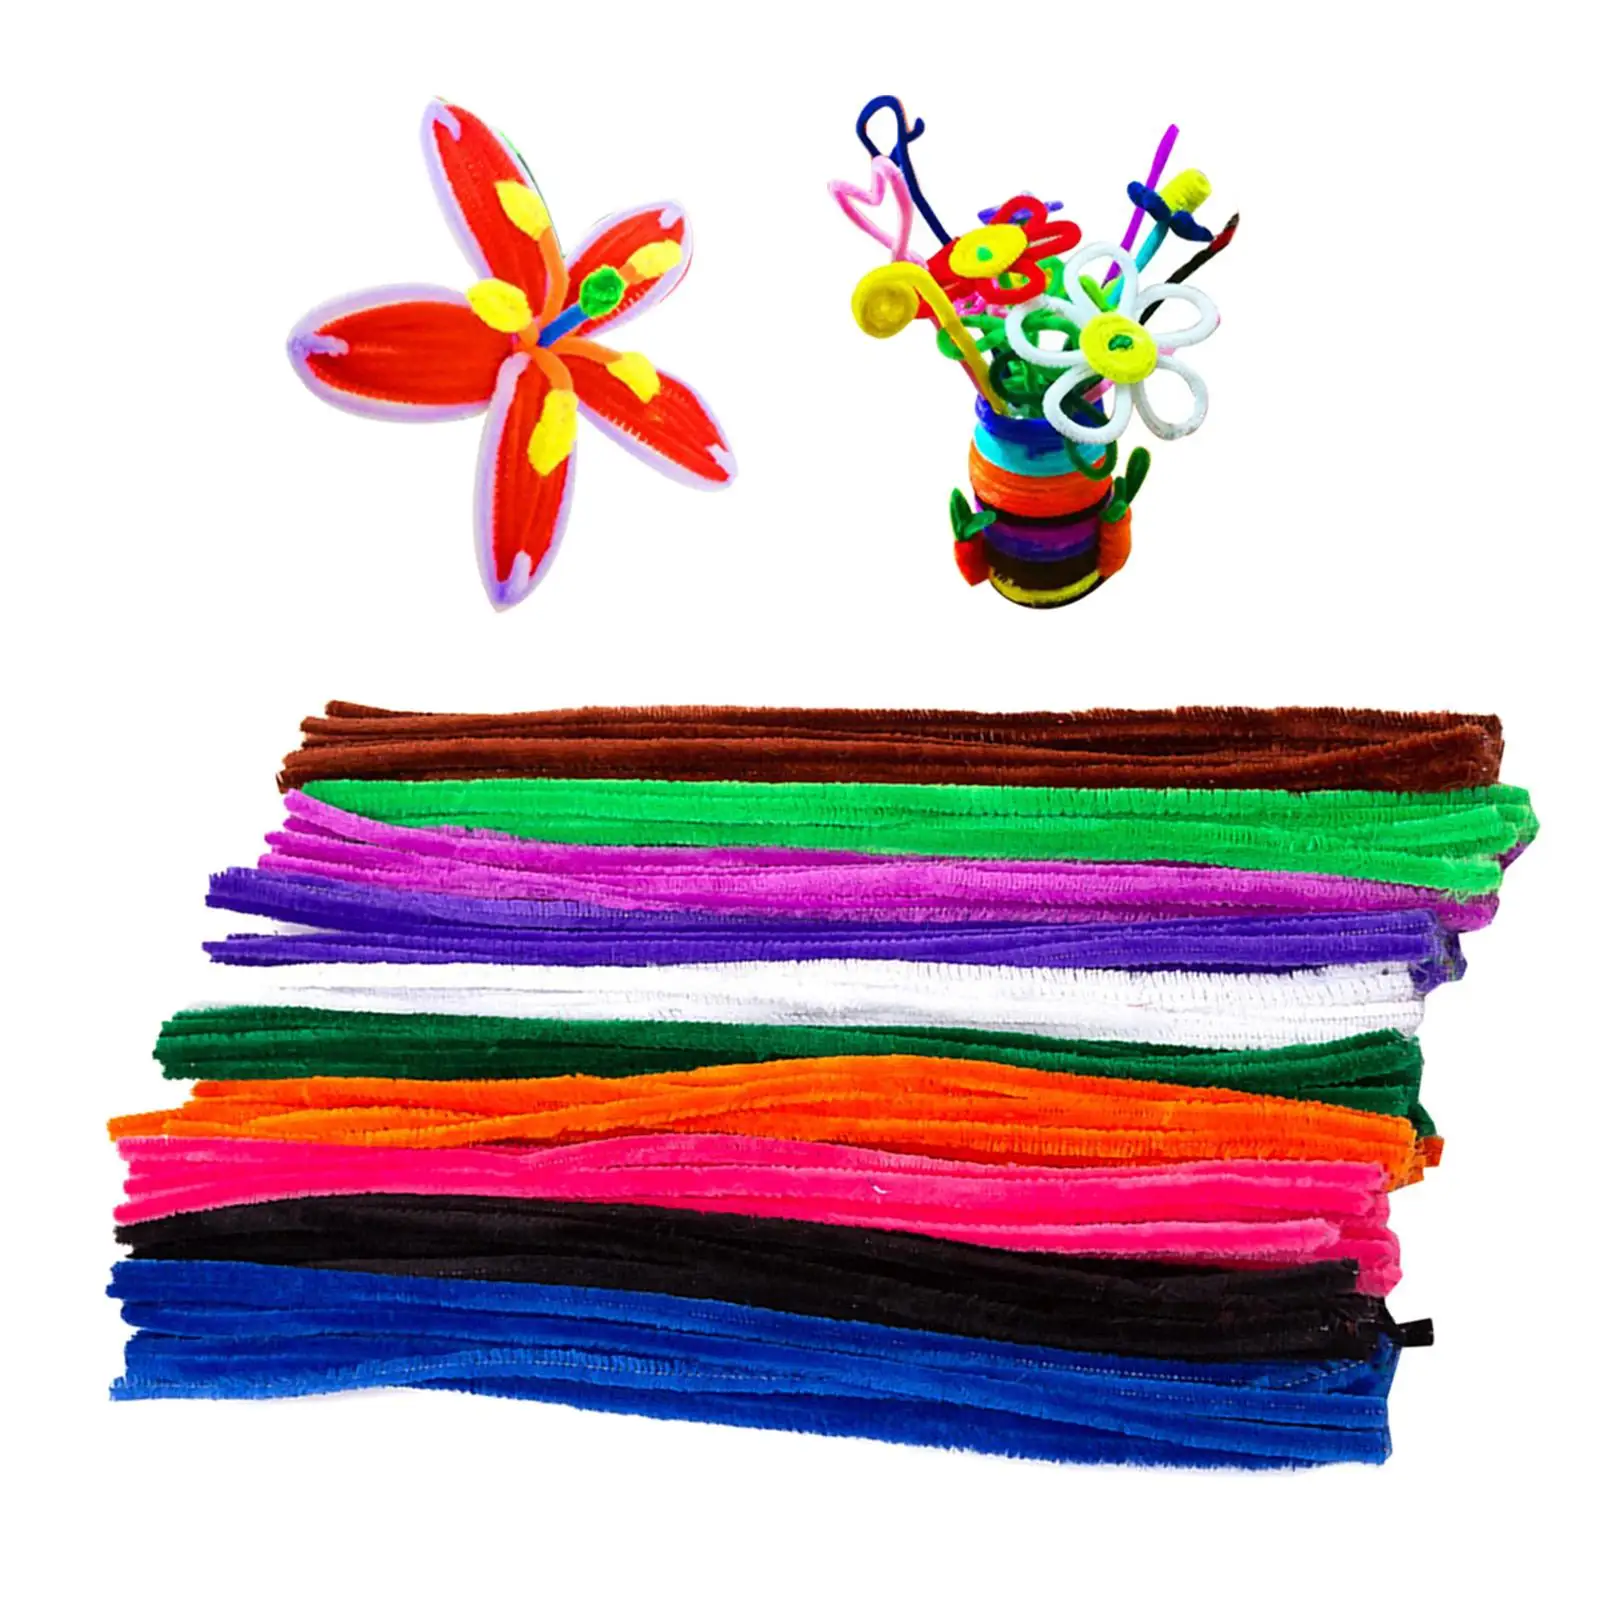 Soft Crafts Supplies DIY Project for Home Kindergarten Preschool